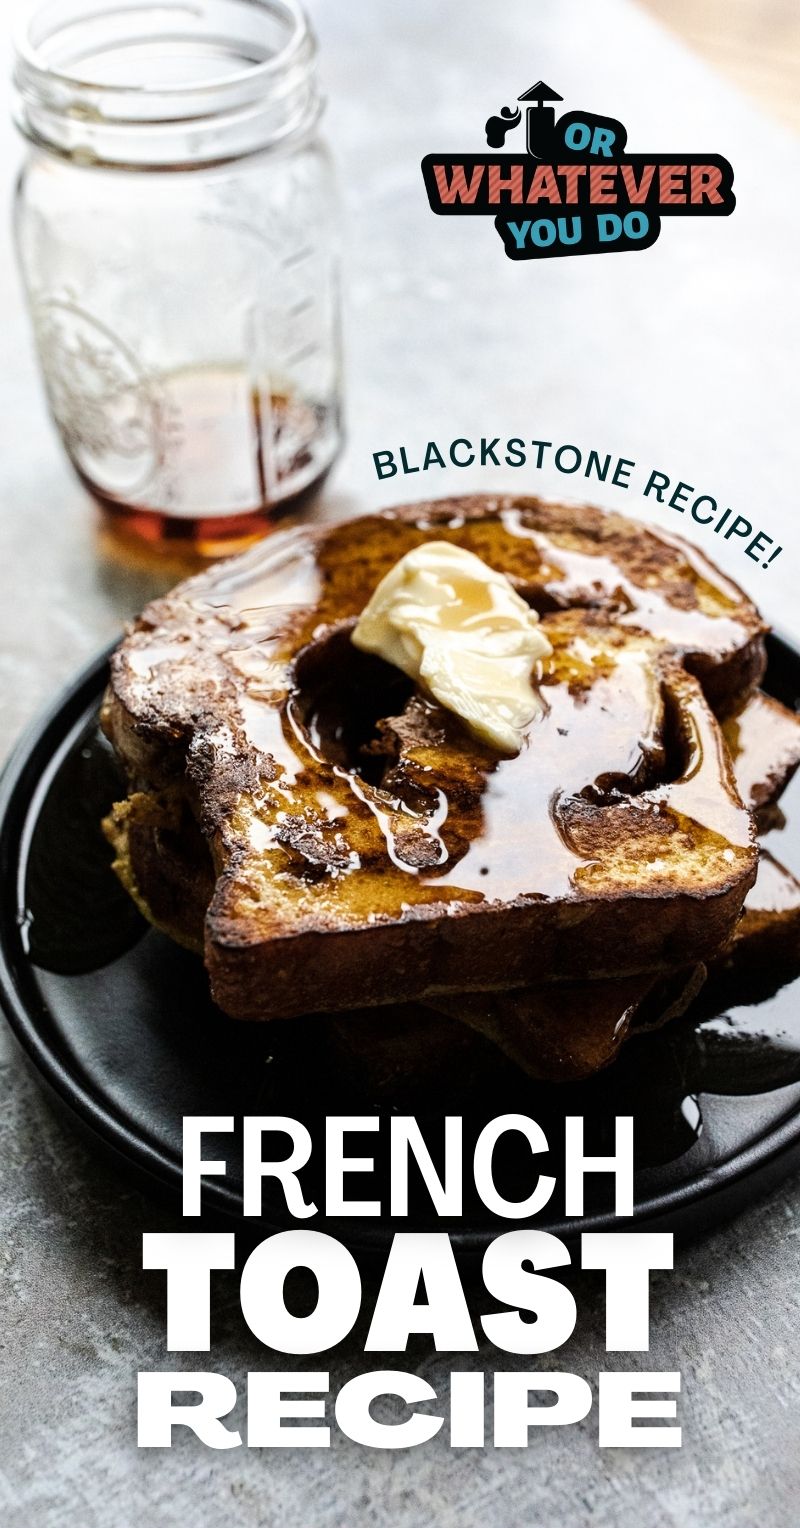 Blackstone French Toast Recipe